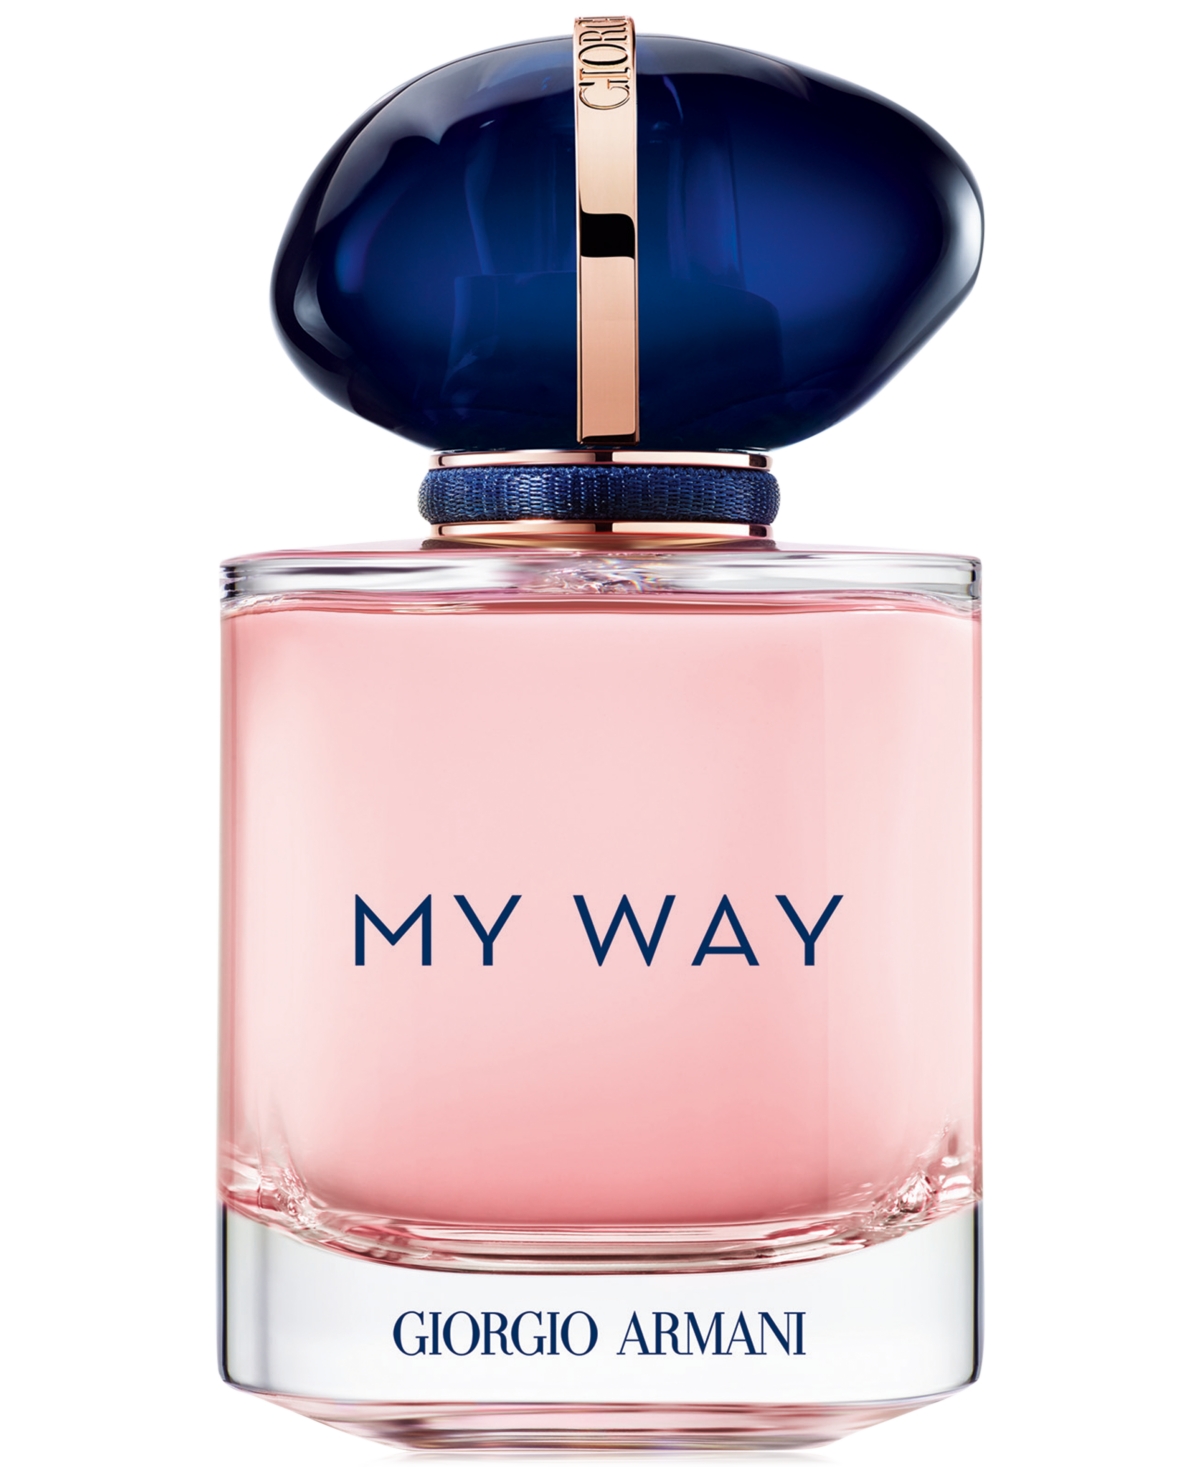 Armani Beauty My Way Eau de Parfum Spray, 1.7-oz.